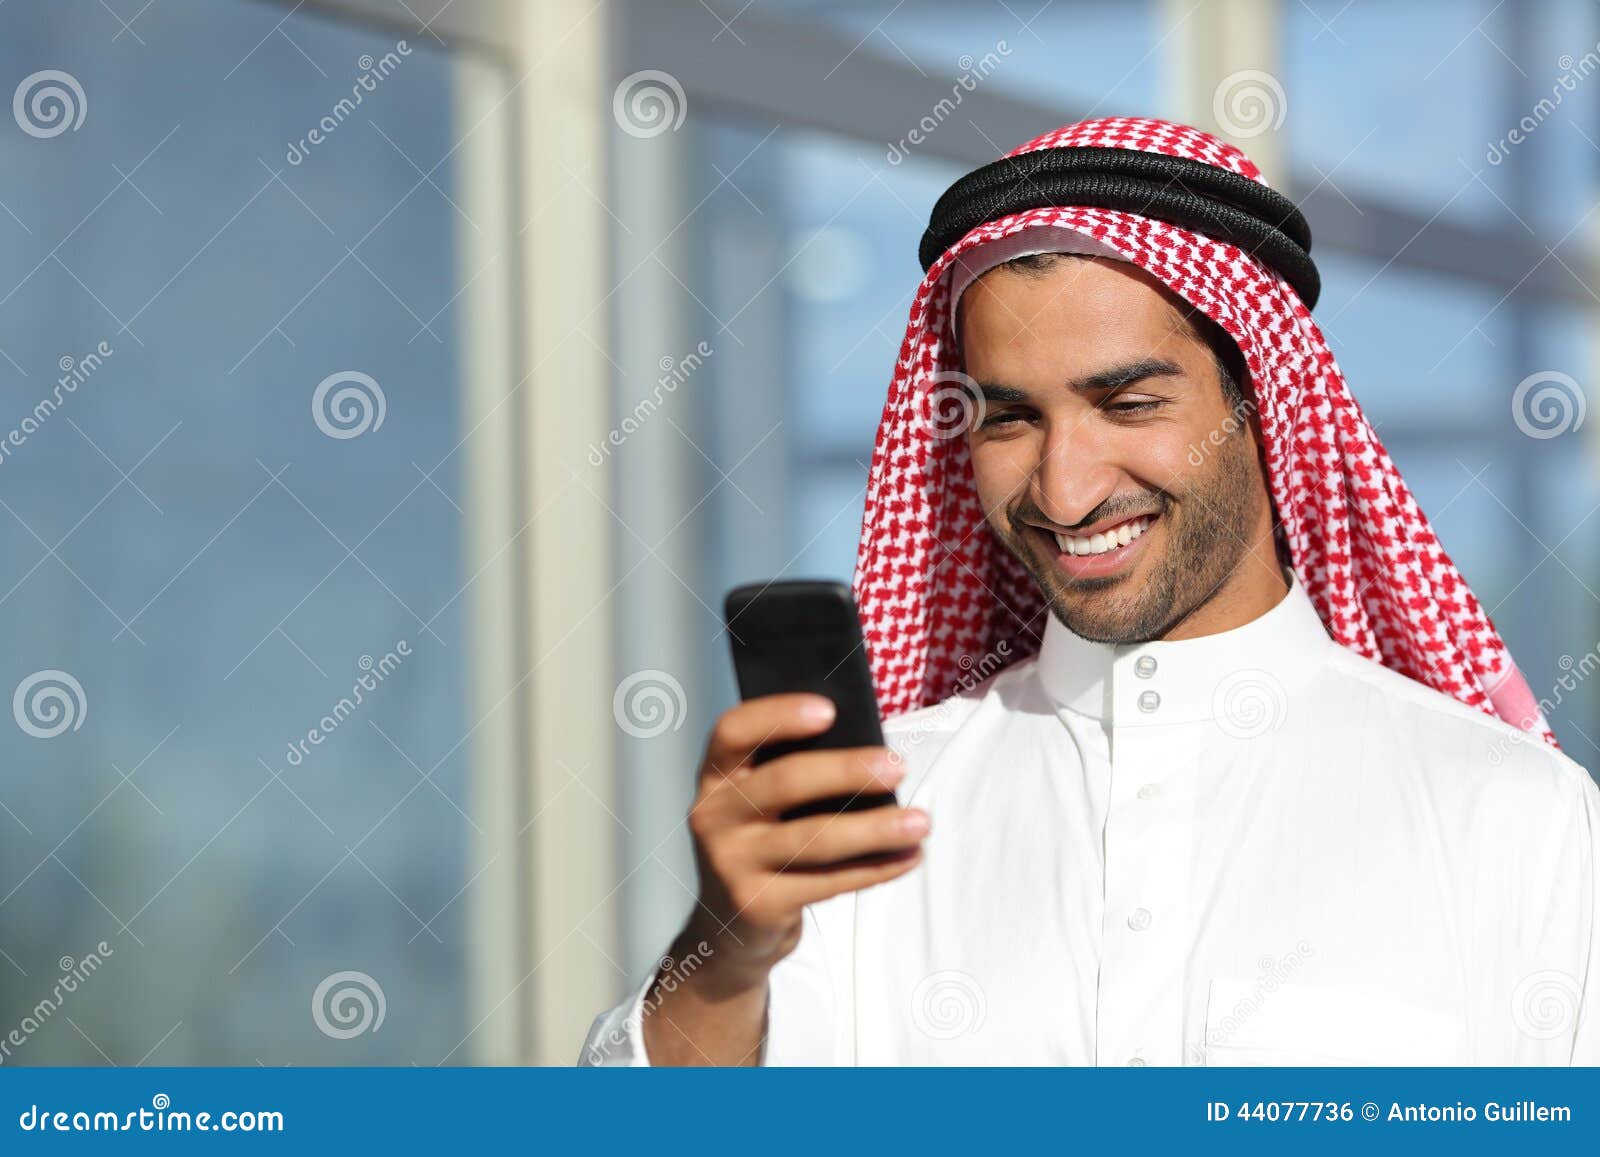 arab saudi businessman working with his phone